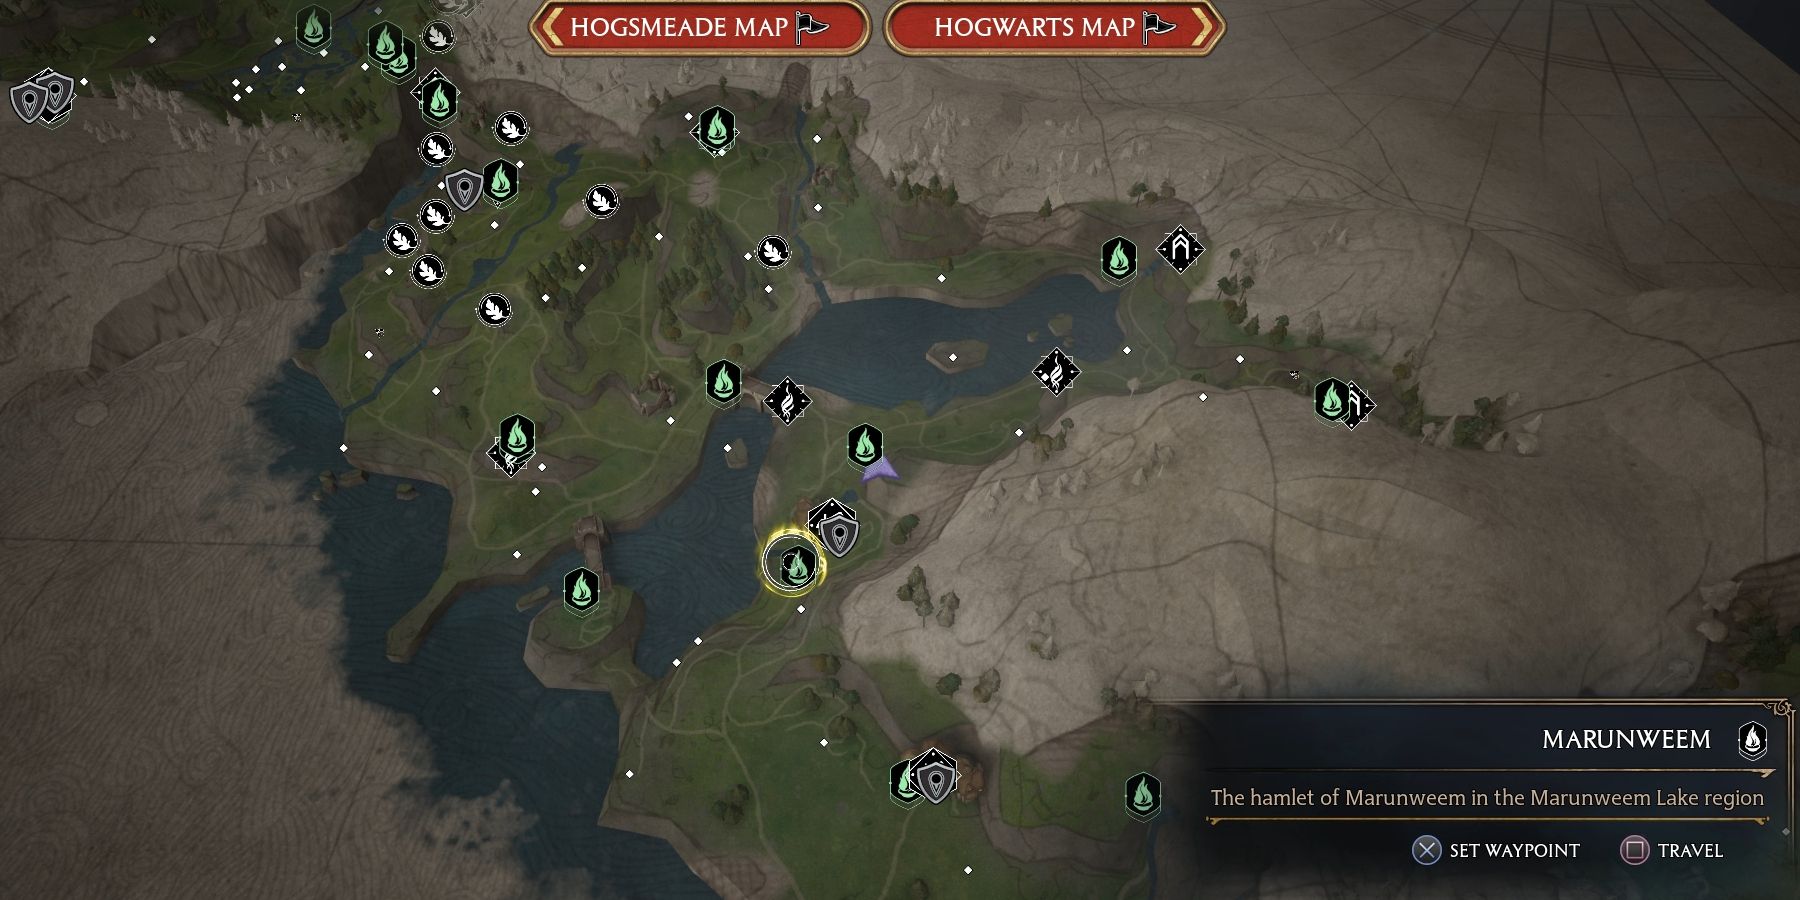 marunween treasure vaults locations in hogwarts legacy